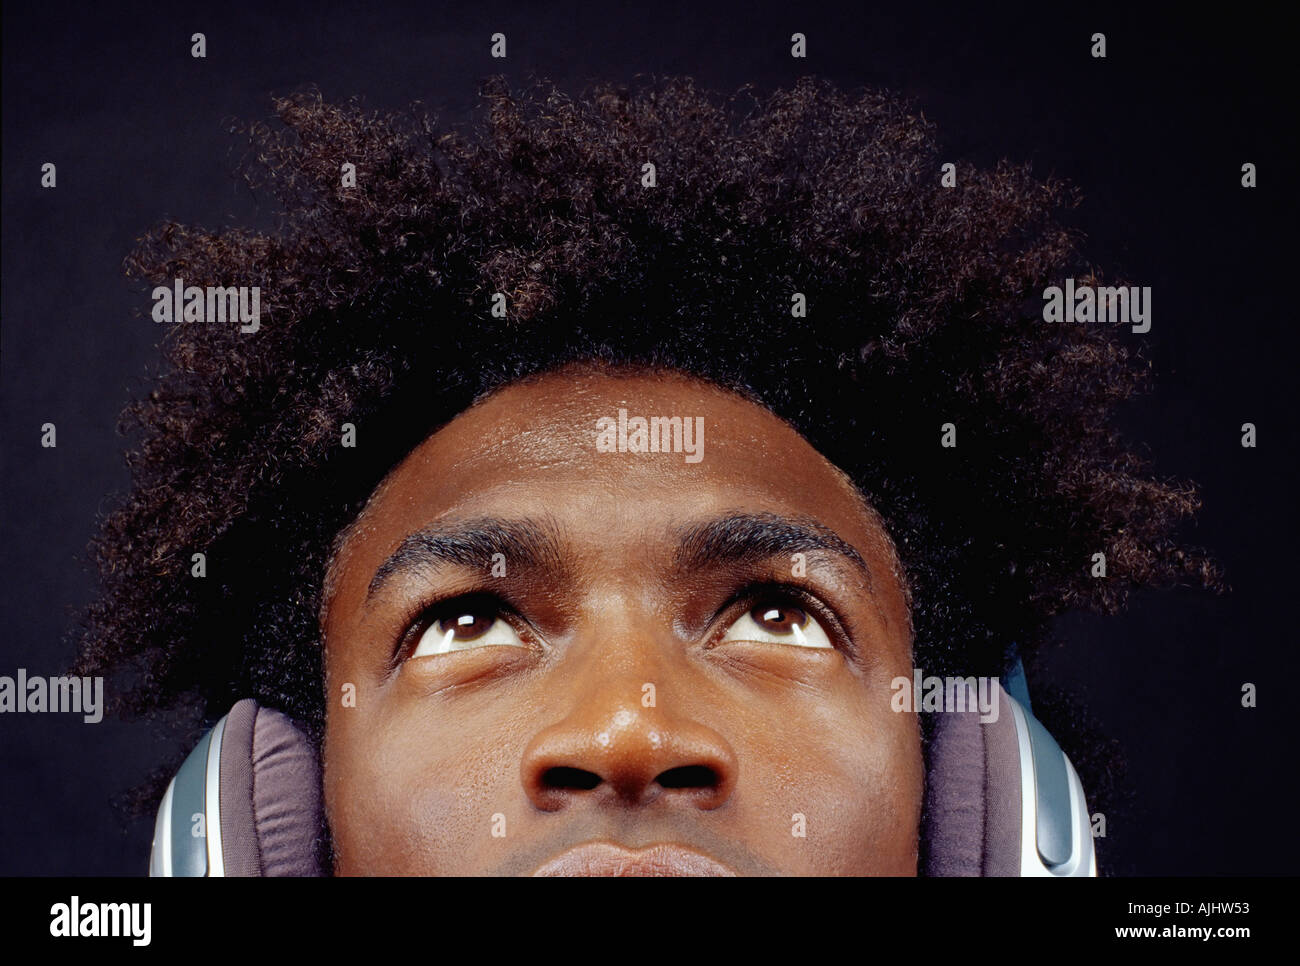 Man wearing headphones Stock Photo